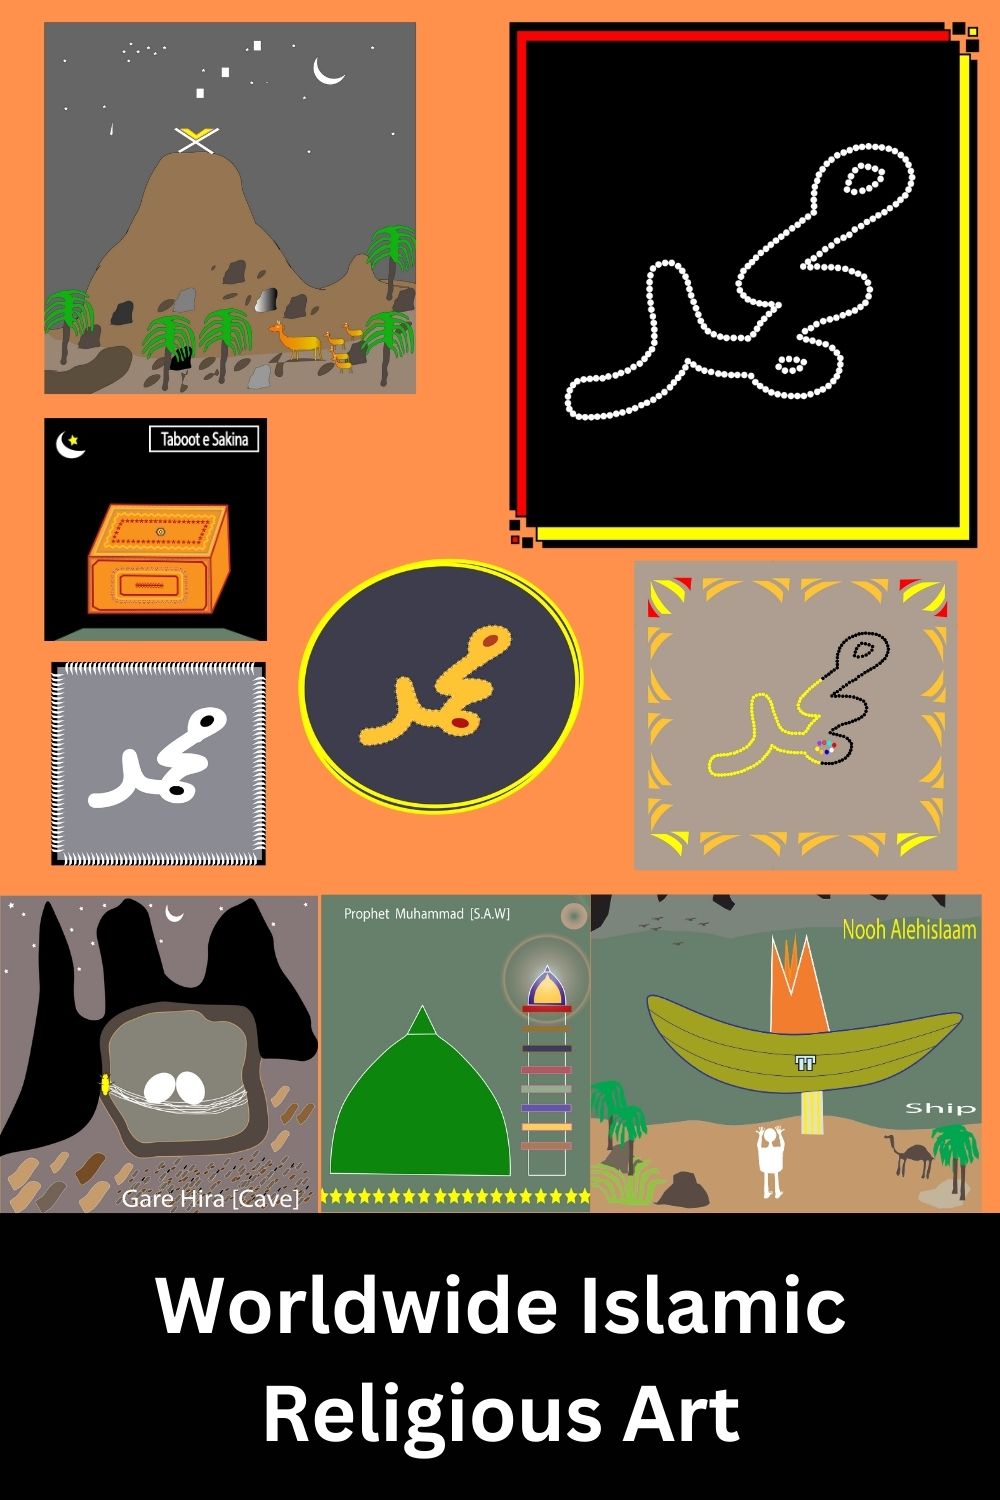 Islamic Religious Art Grapahics Worldwide Bundle Buy Now 27 Art pinterest preview image.